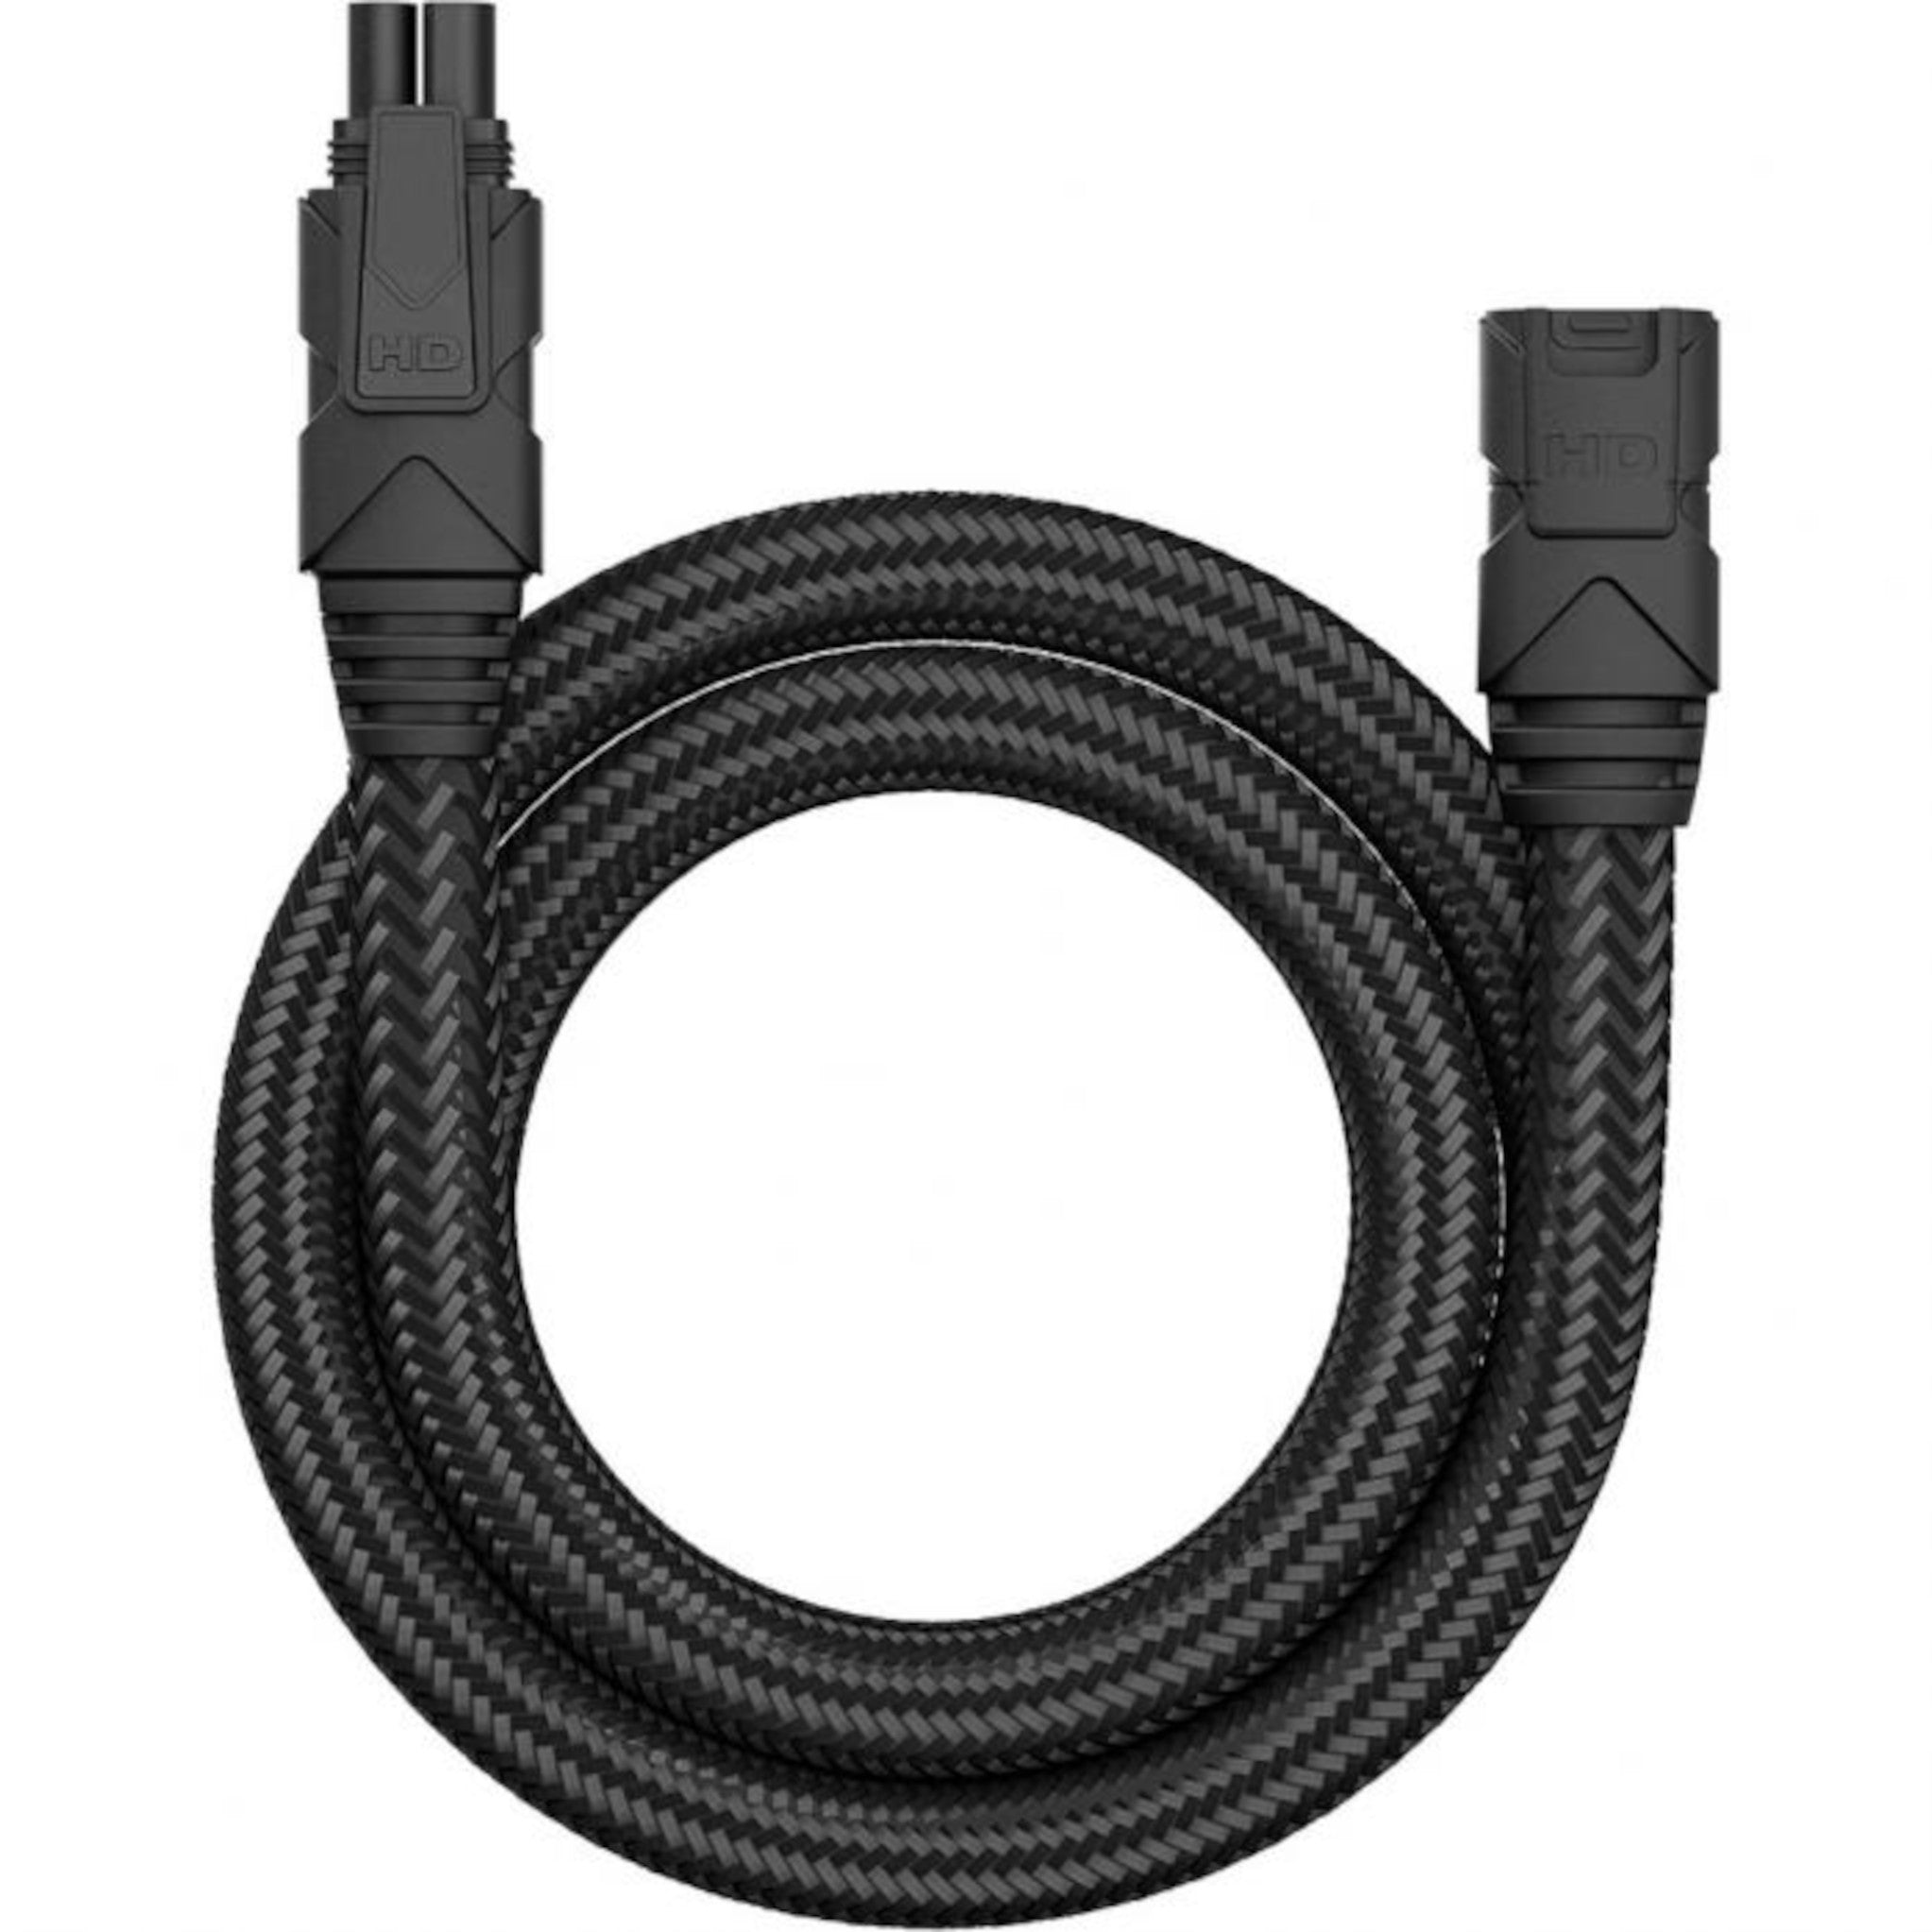 Noco GPA001 HD 10' Extension Cable for GENIUSPRO25